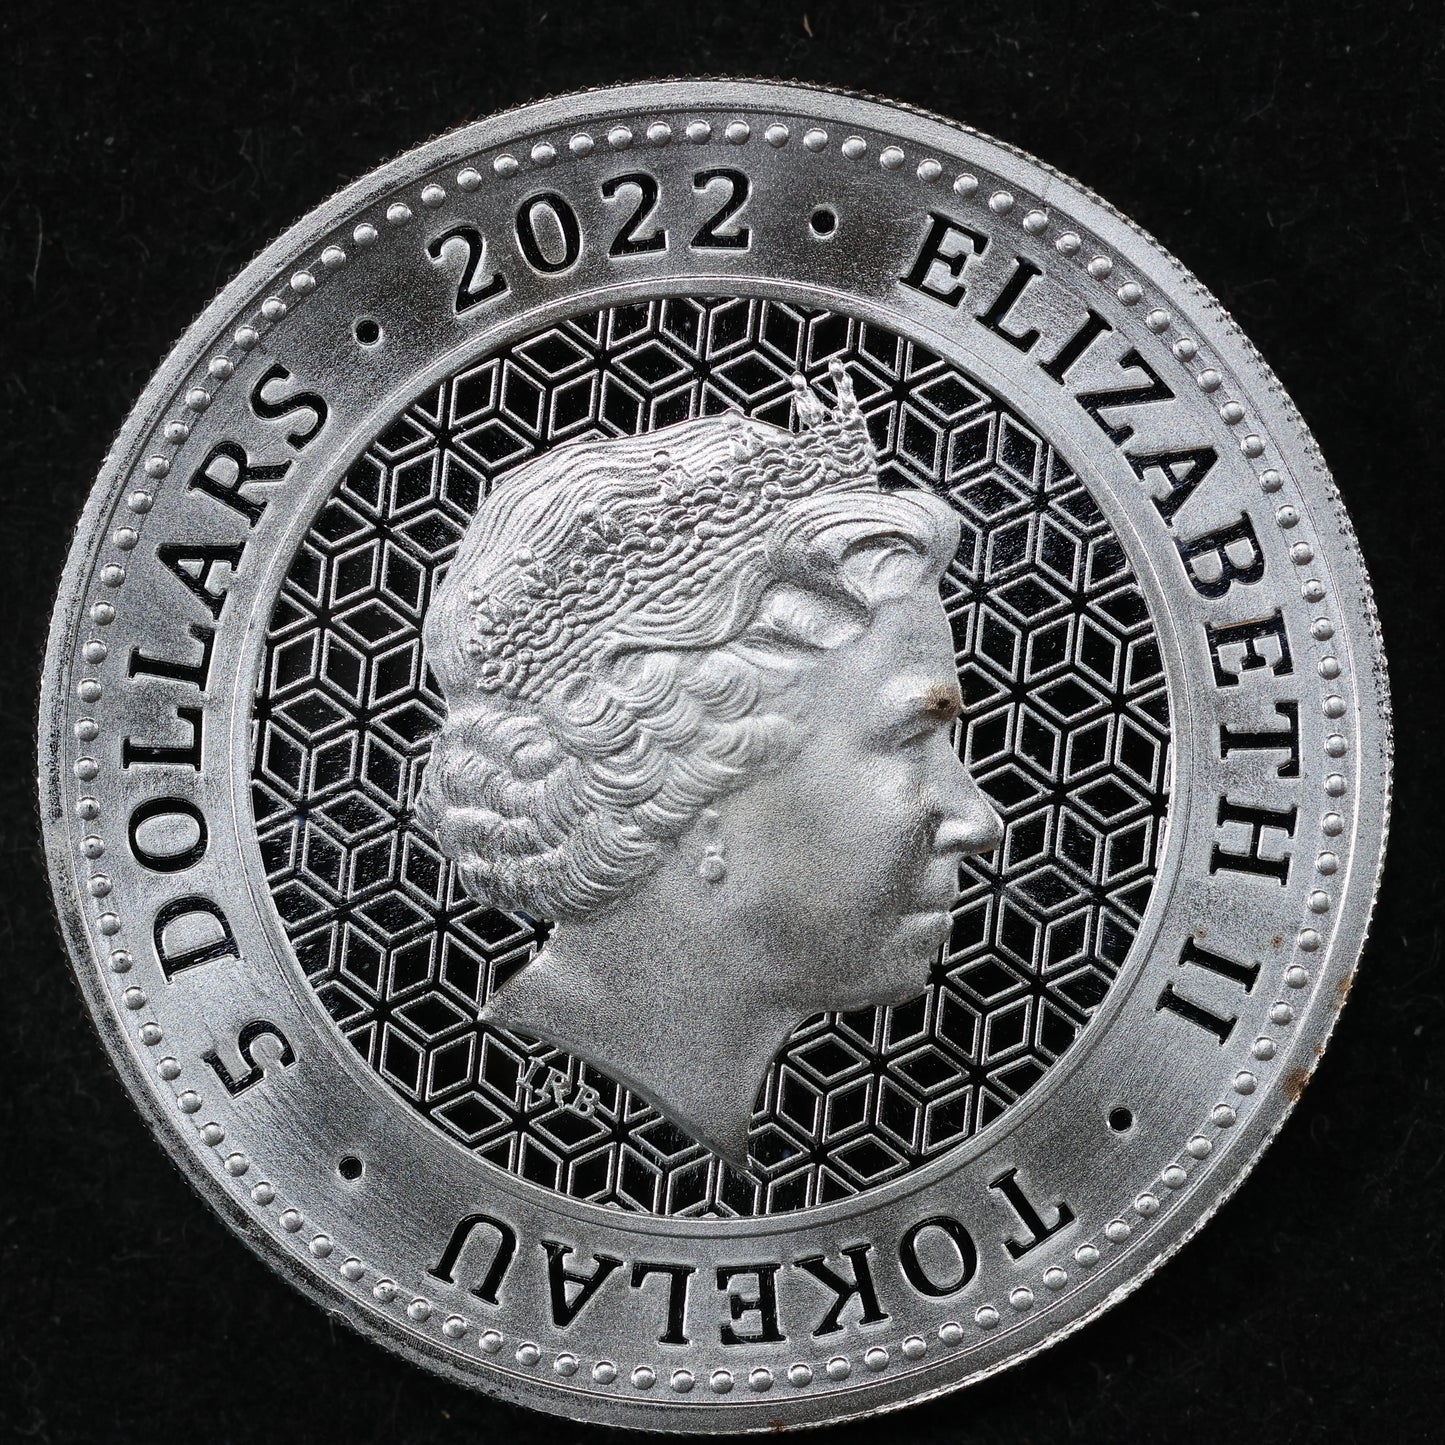 1 oz .9999 Silver 2022 Tokelau BULL & BEAR $5 Coin